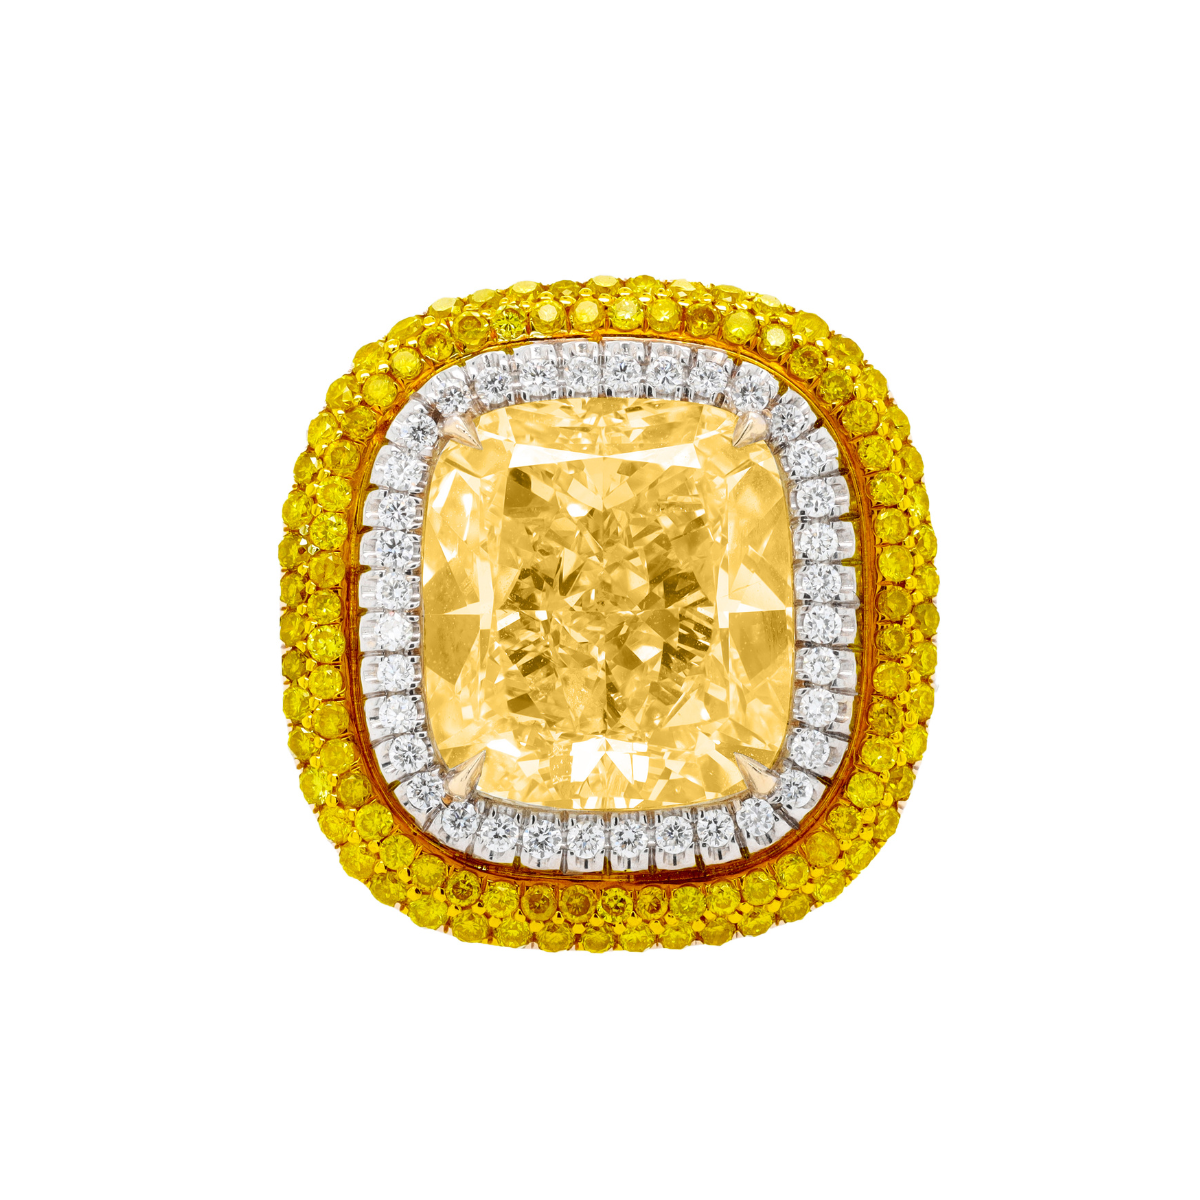 8.56ct Fancy Yellow Cushion Cut Diamond Ring